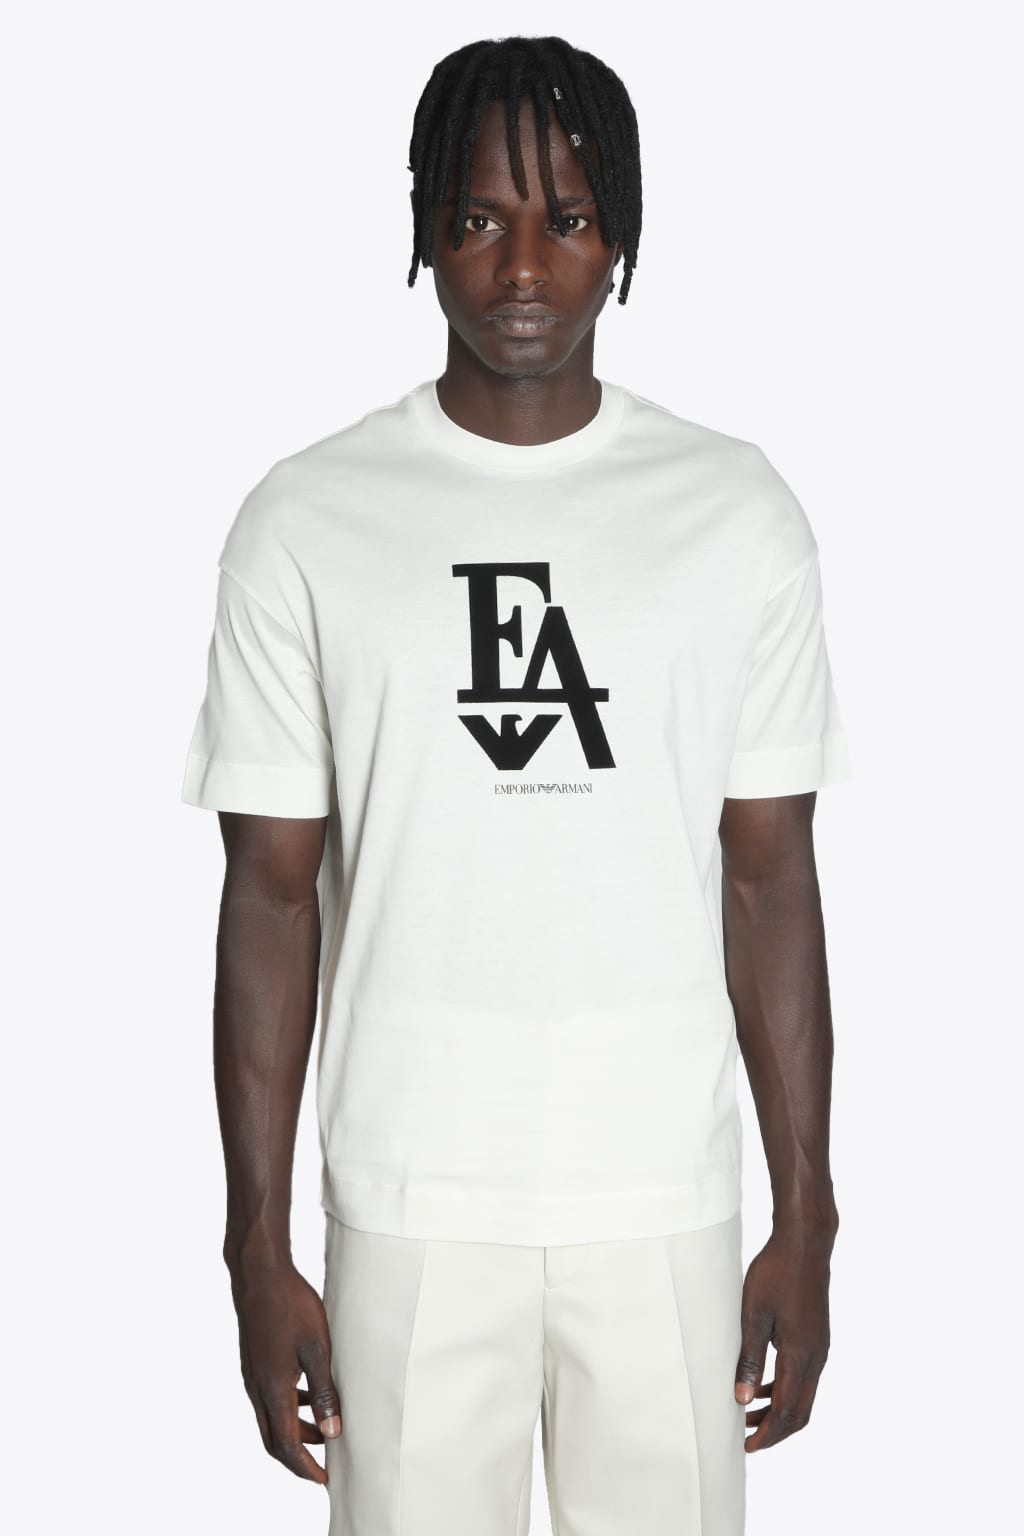 Emporio Armani T-shirt White t-shirt with flocked graphic logo print.